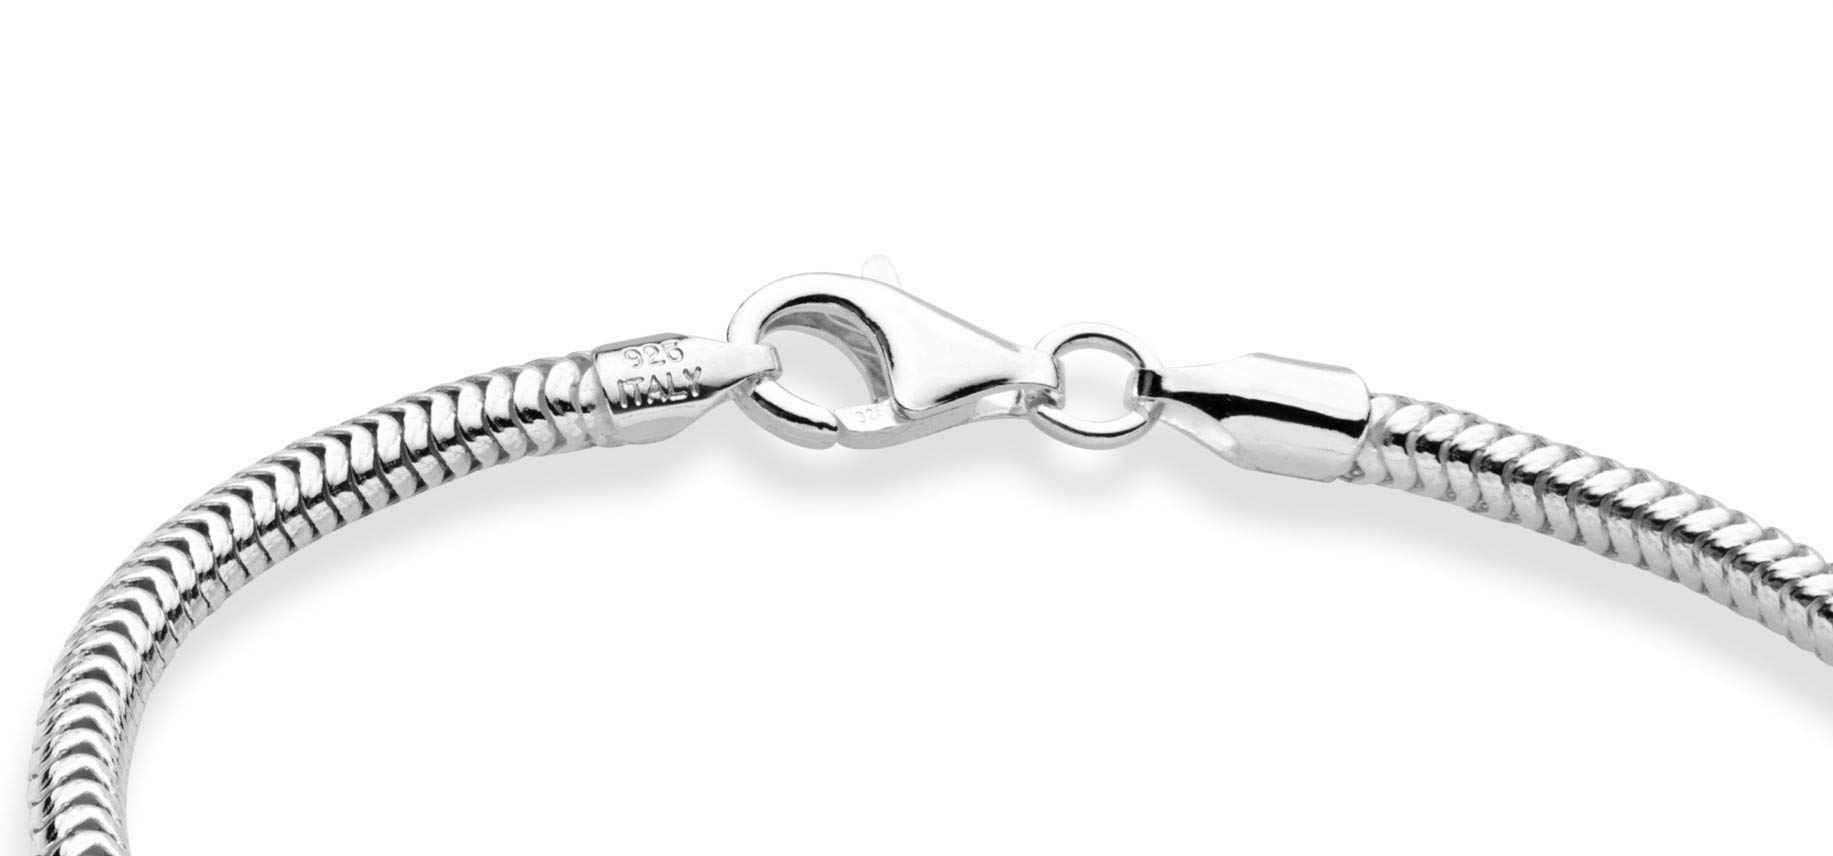 Miabella Solid 925 Sterling Silver Italian 3mm Snake Chain Bracelet for Women Men Teen Girls, Charm Bracelet, Made in Italy